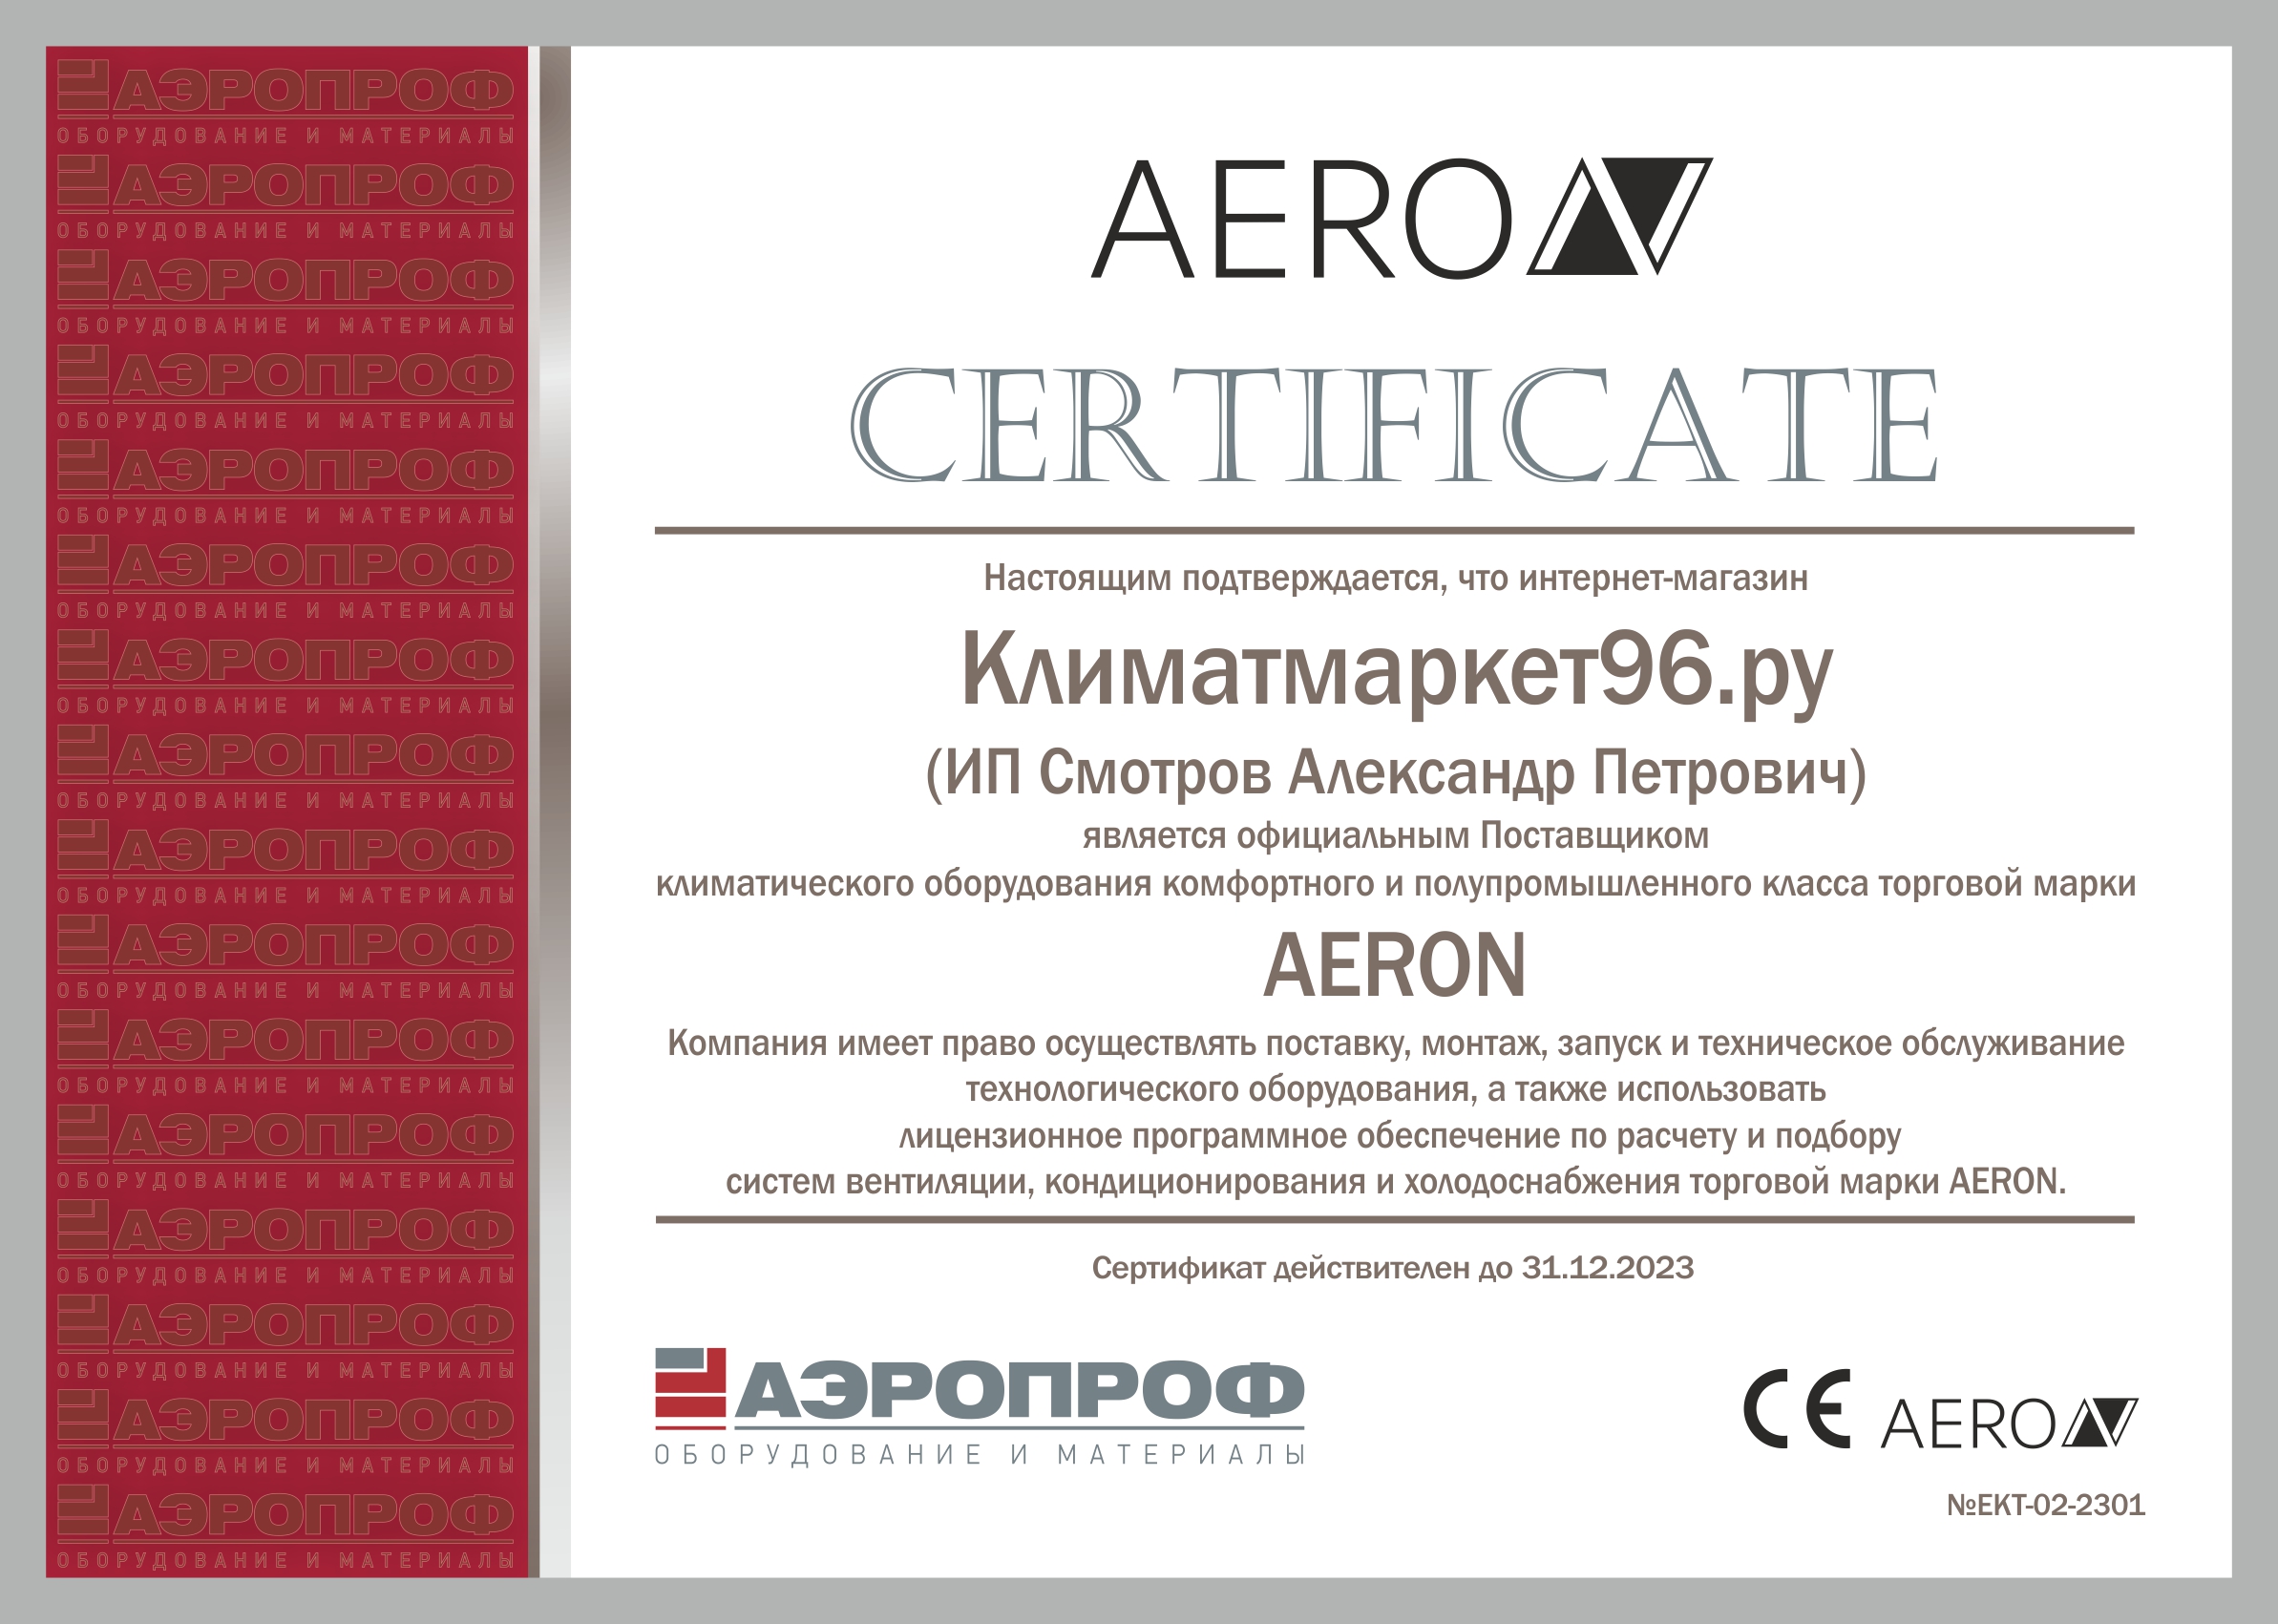 sert23-km96-aeron Kondicioner Aero ALRS-II-24IHA4-01/ALRS-II-24OHA4-01 kypit v Ekaterinbyrge v internet-magazine KlimatMarket96.ry Сертификат официального дилера